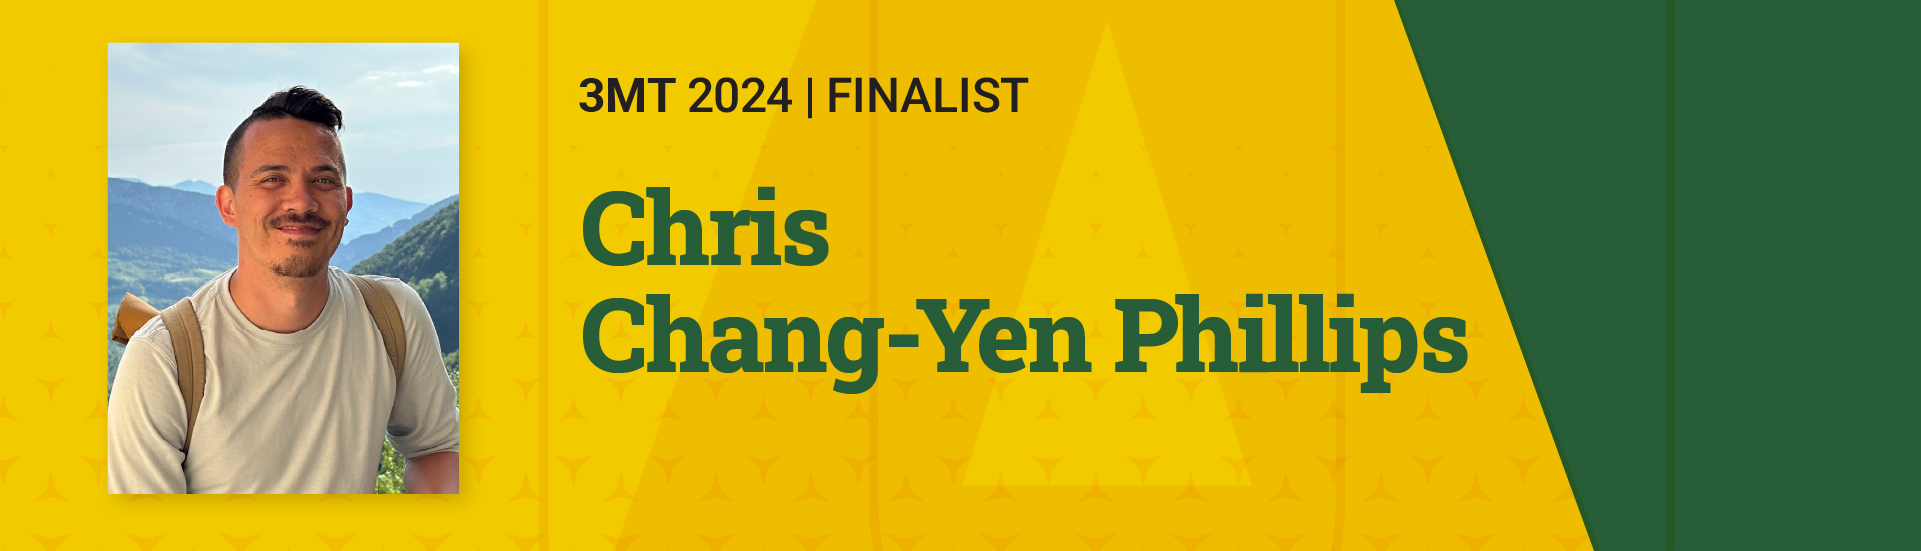 3MT 2024 Finalist Chris Chang-Yen Phillips